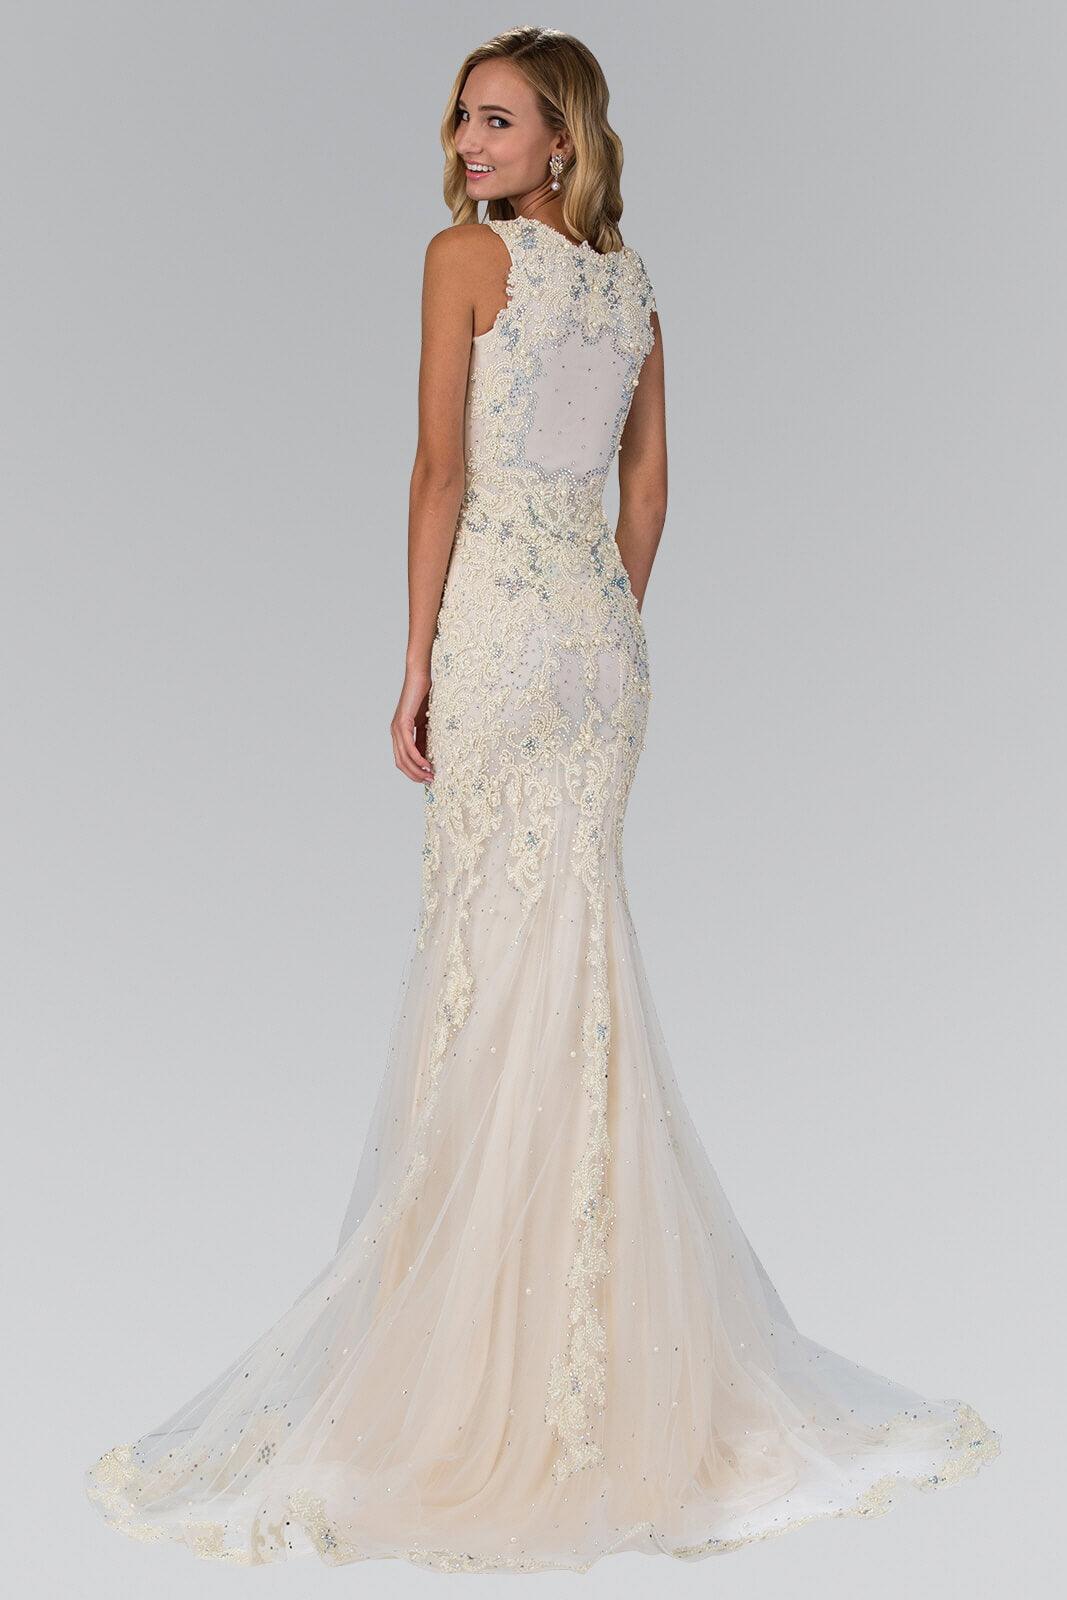 Long Wedding Dress Lace Evening Gown - The Dress Outlet Elizabeth K